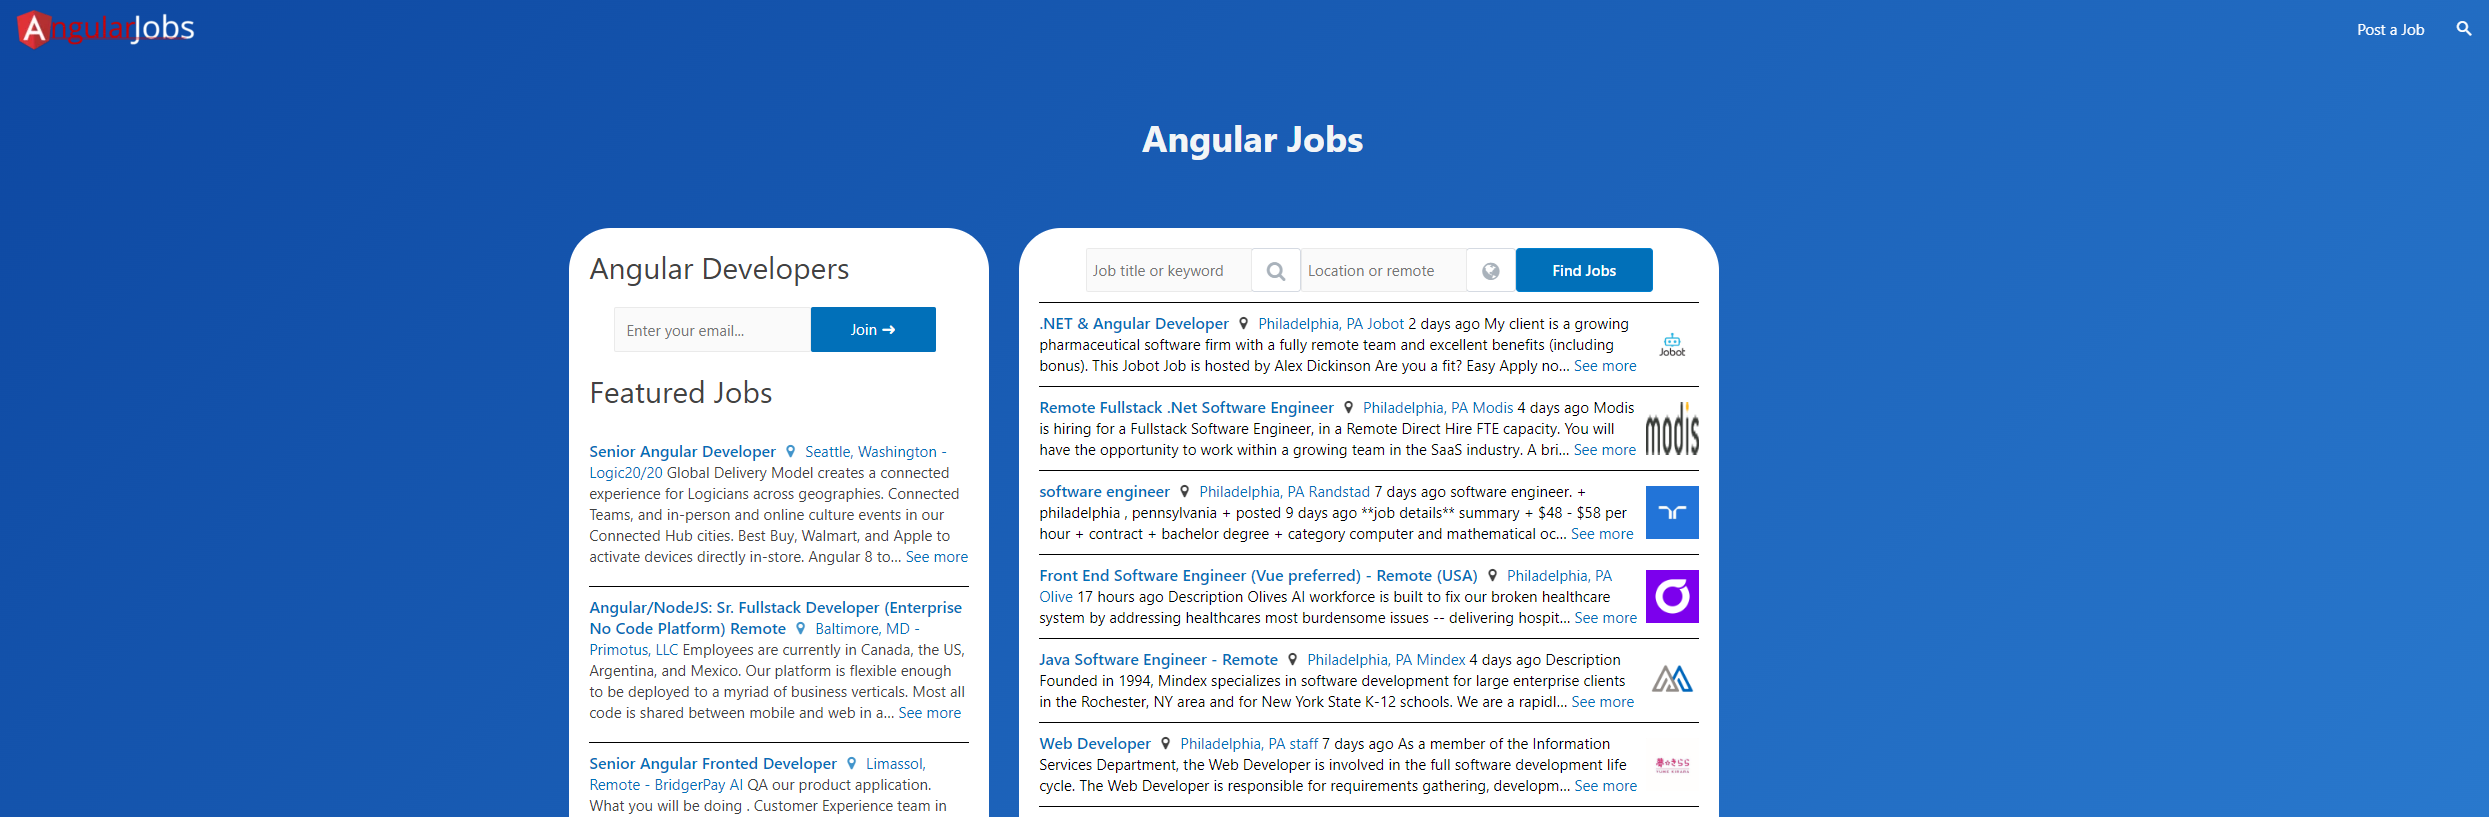 Angular Jobs Banner